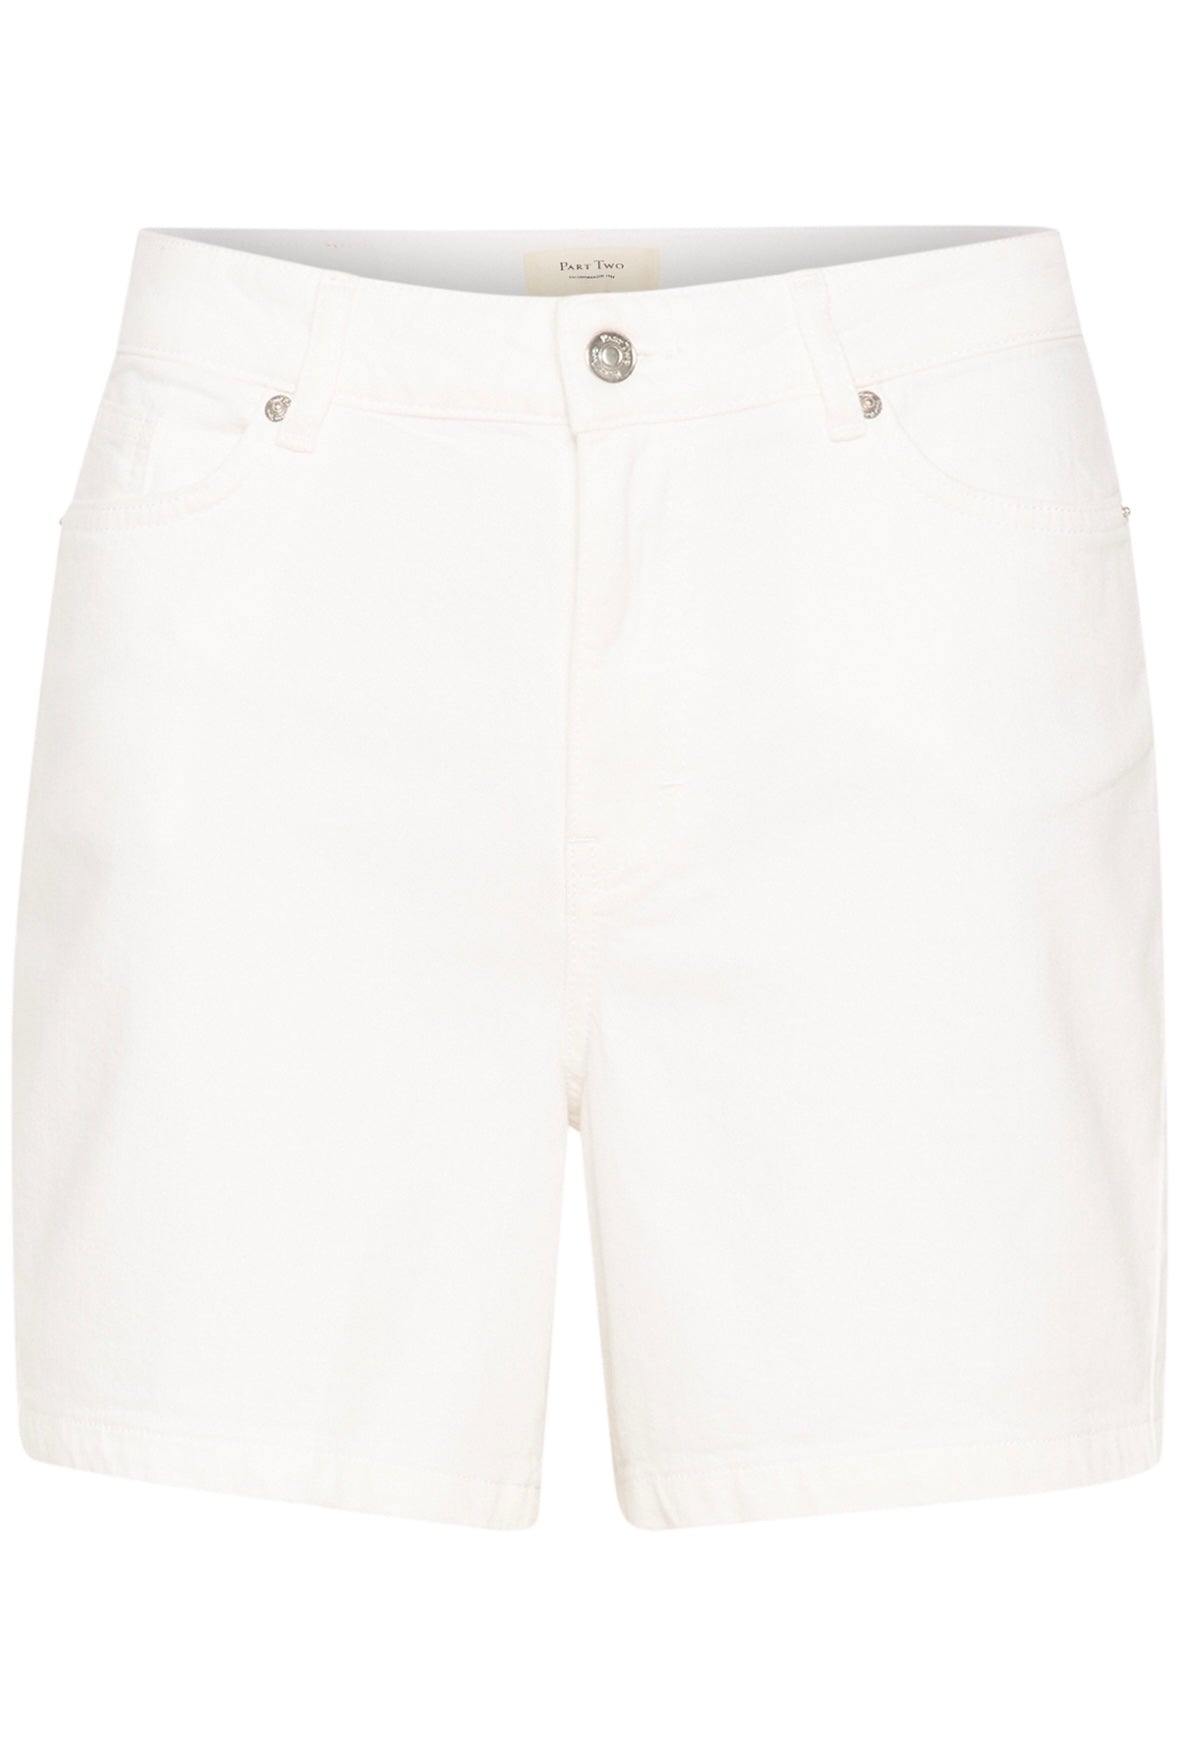 Part Two Gida shorts - Bright White